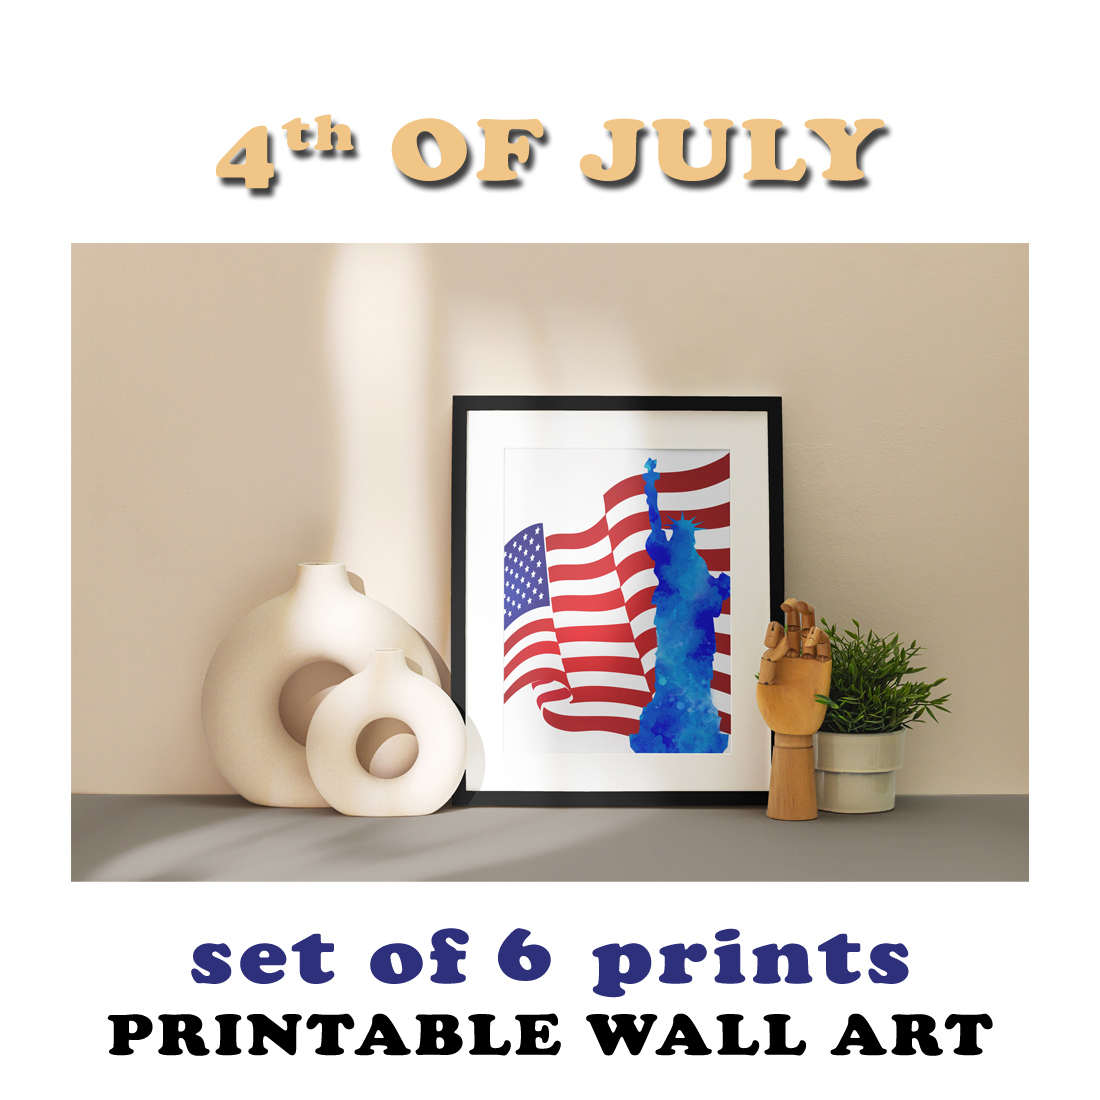 4TH of july printable wall art -set of 6 prints-Printable wall art preview image.